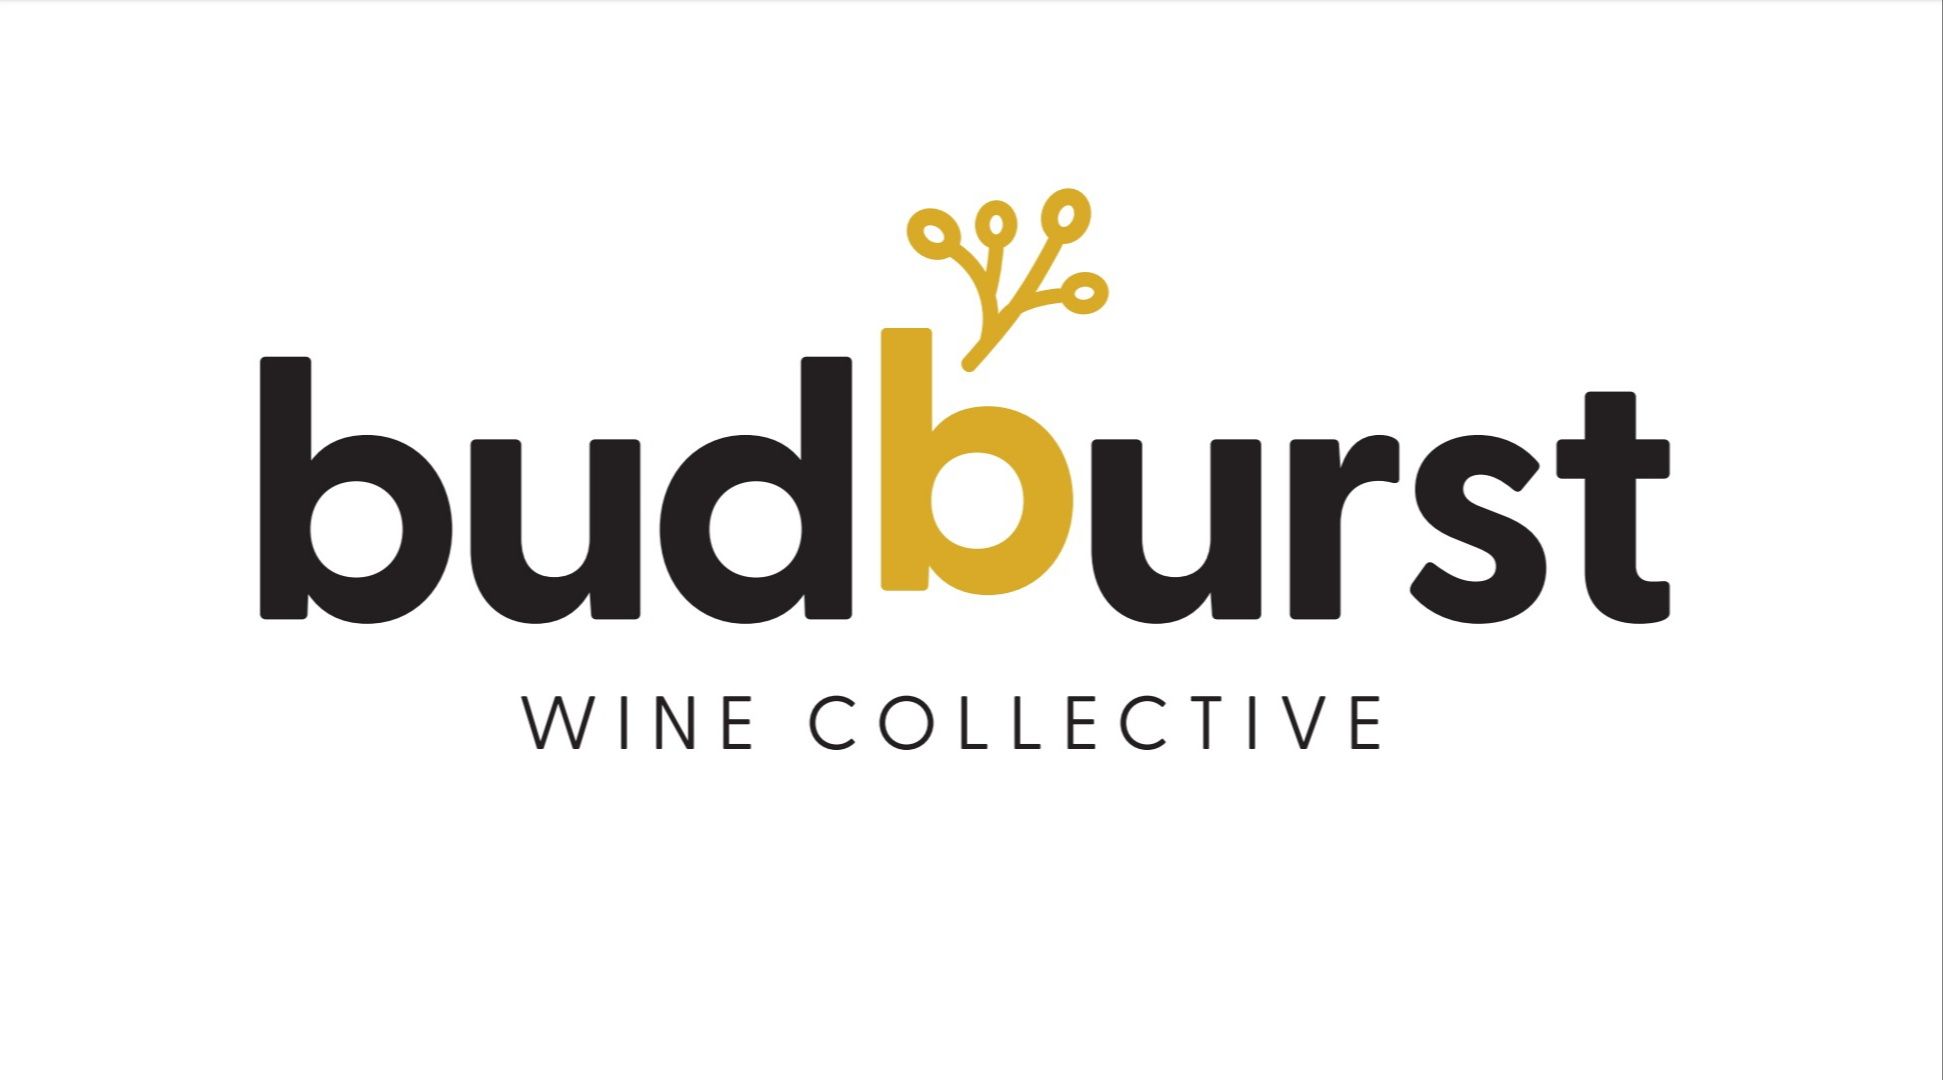 Budburst Wine Collective